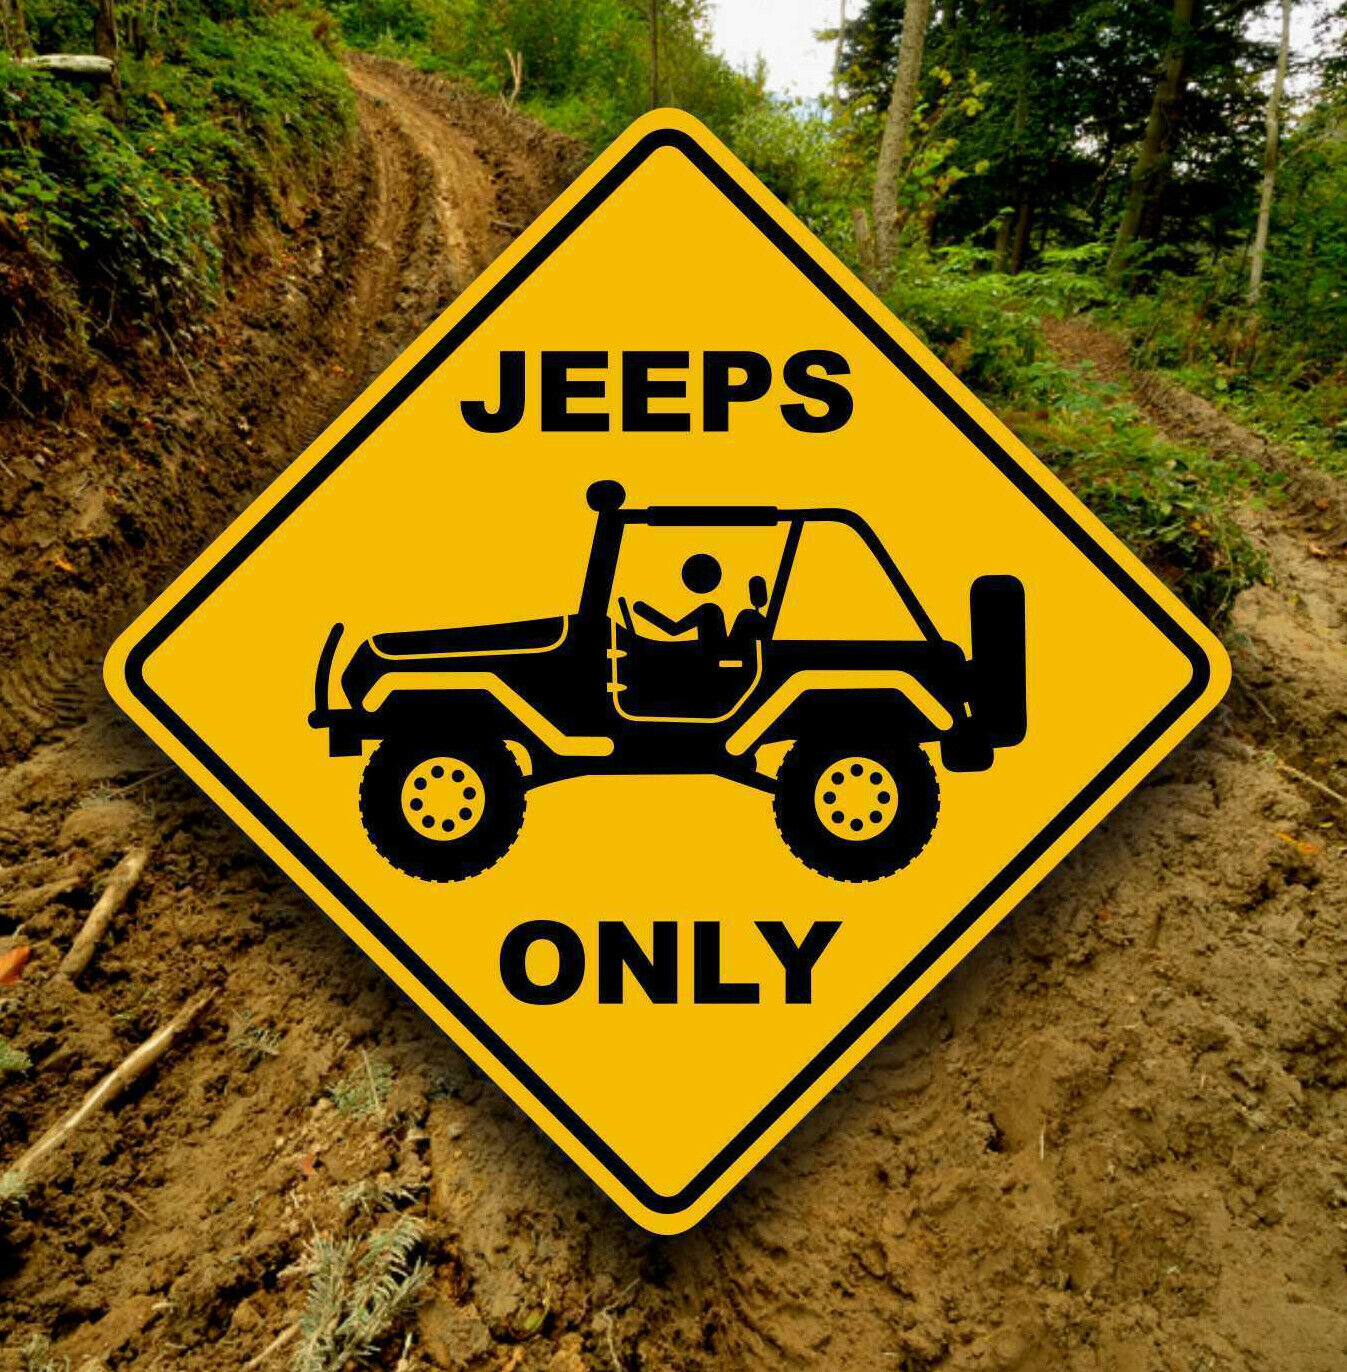 JEEPS ONLY - Aluminum Warning Sign - 4x4 Off Road Trail Marker - Wrangler - CJ